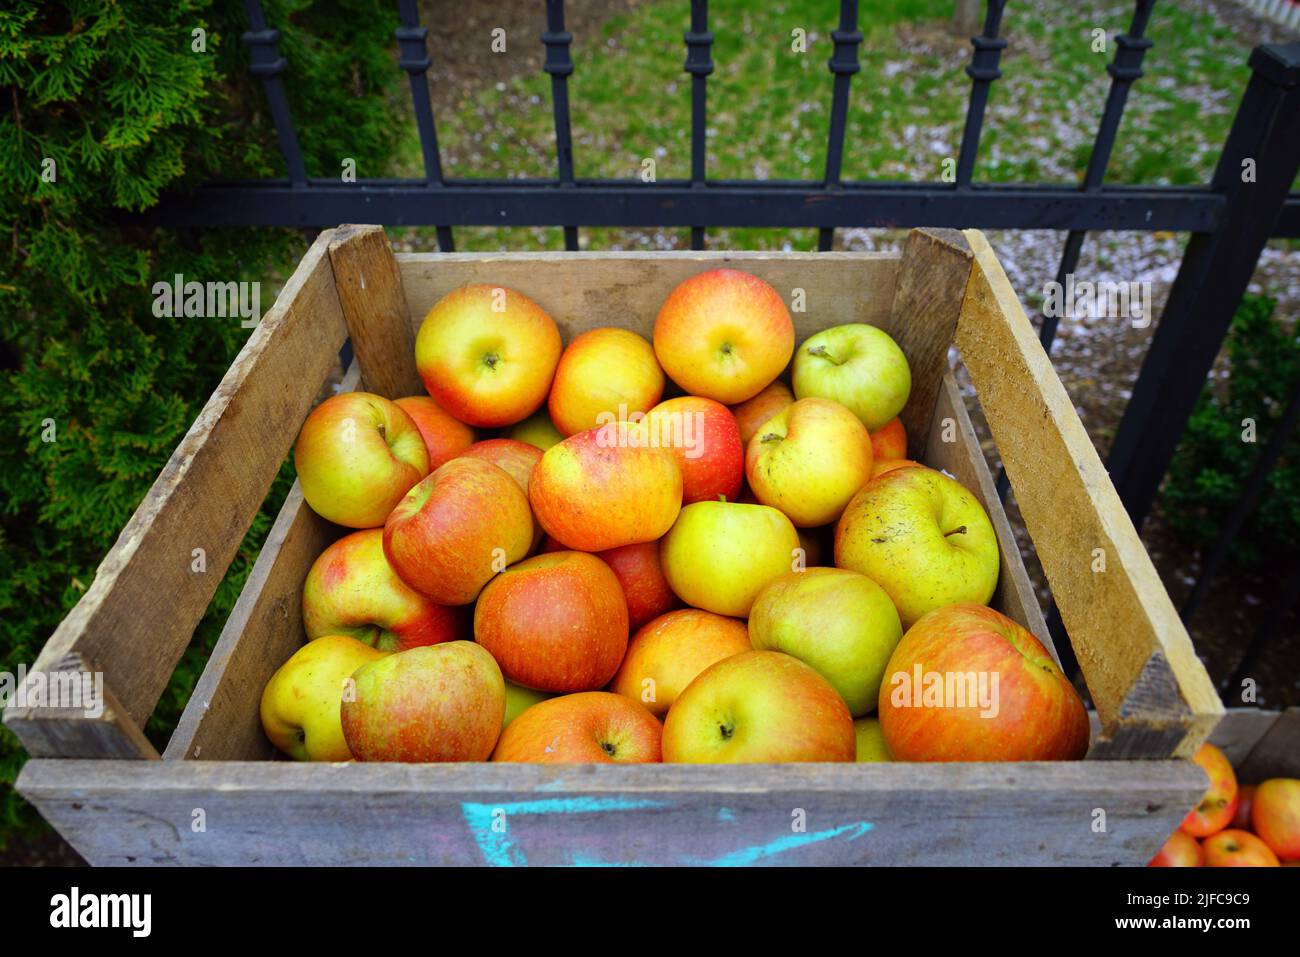 https://c8.alamy.com/comp/2JFC9C9/organic-apples-in-crates-at-a-farmers-market-2JFC9C9.jpg